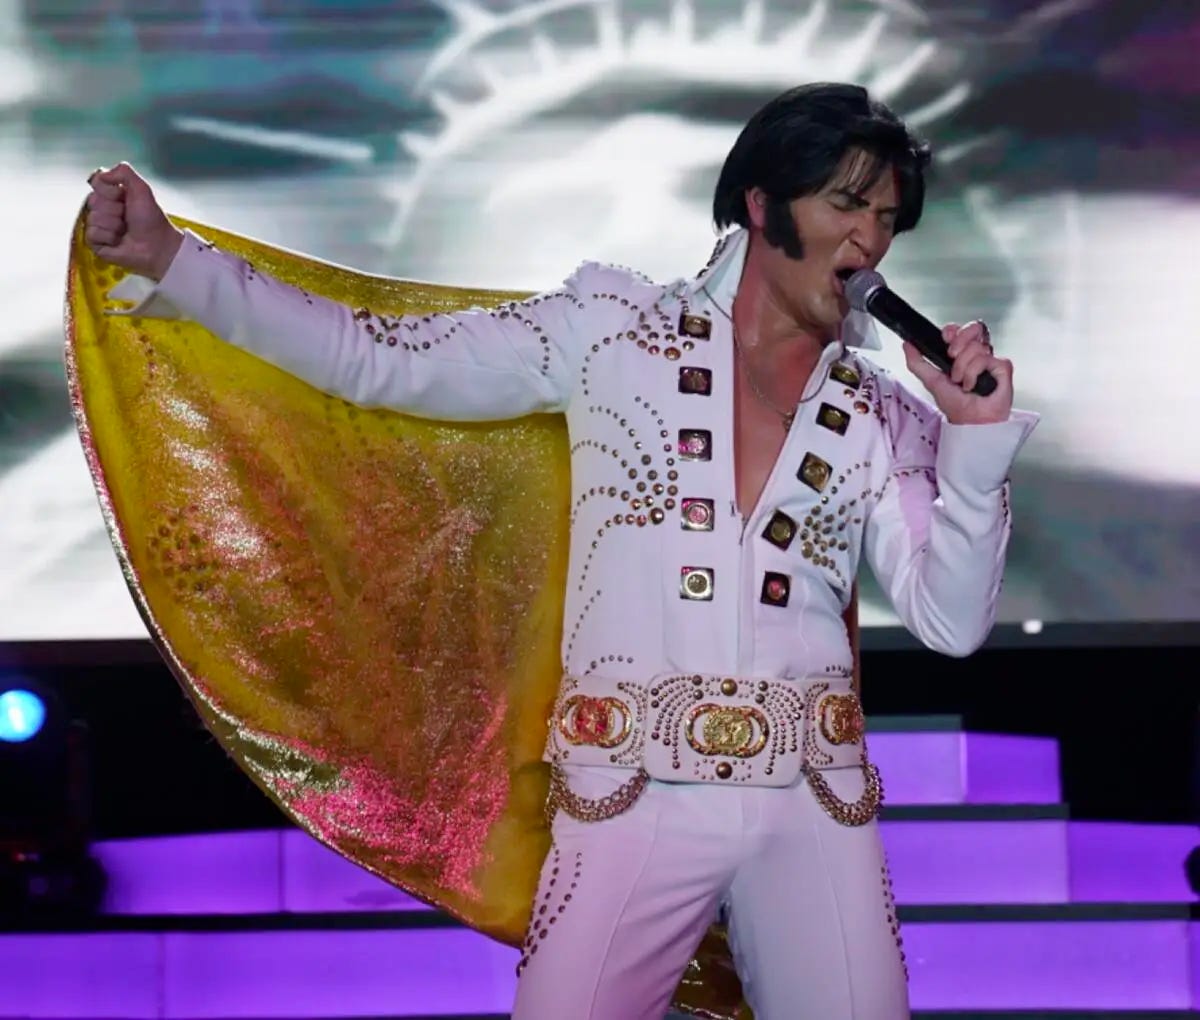 An Elvis Presley impersonator at a Las Vegas show.